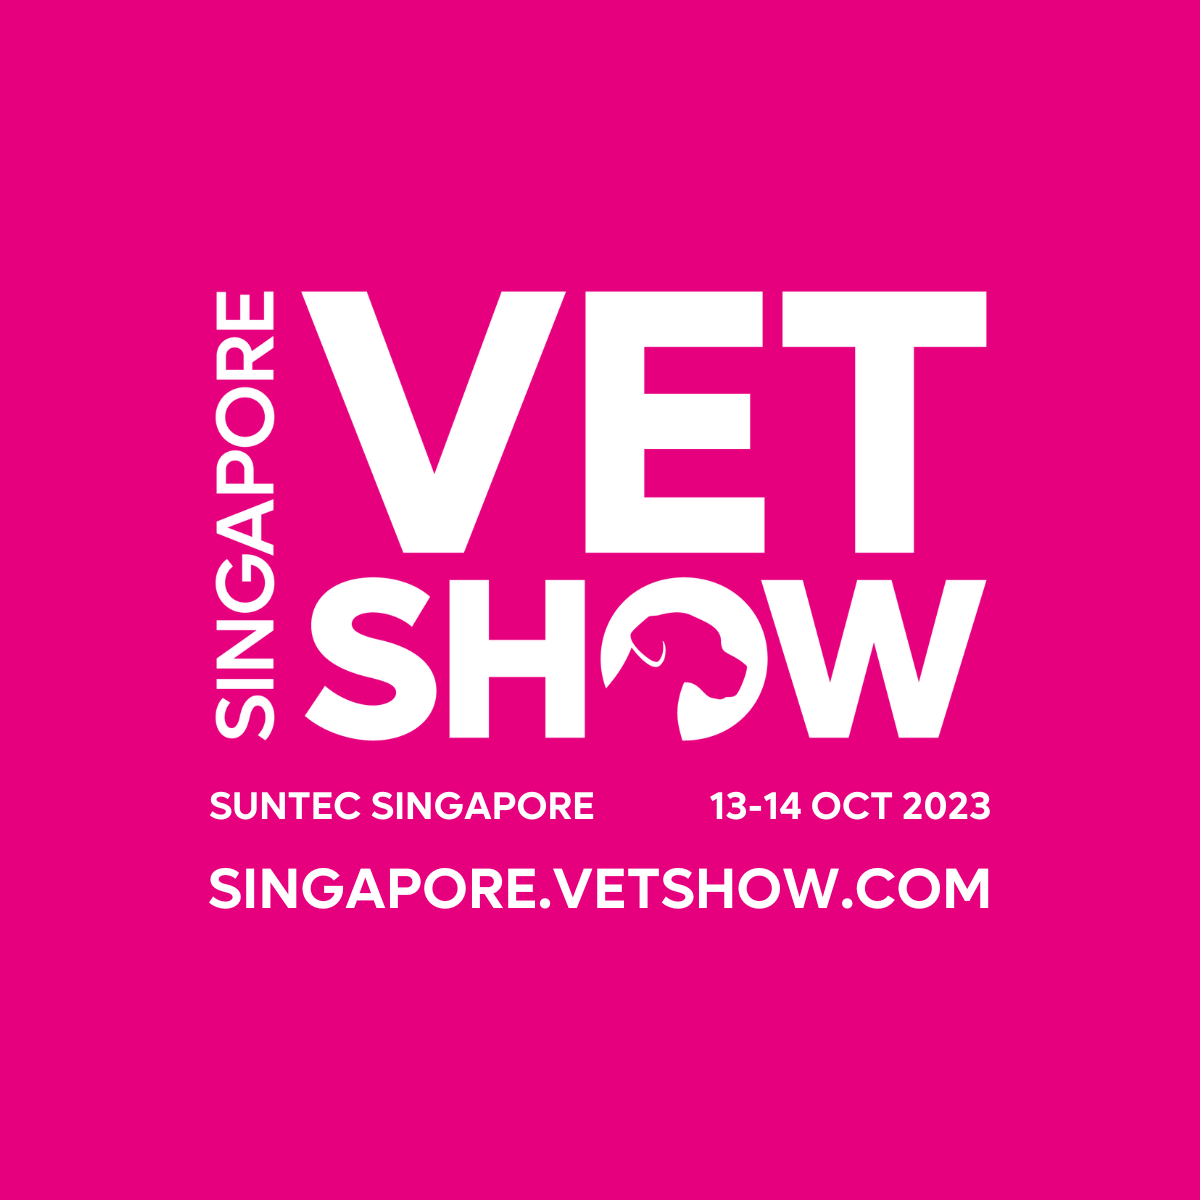 Singapore Vet show logo white 2023